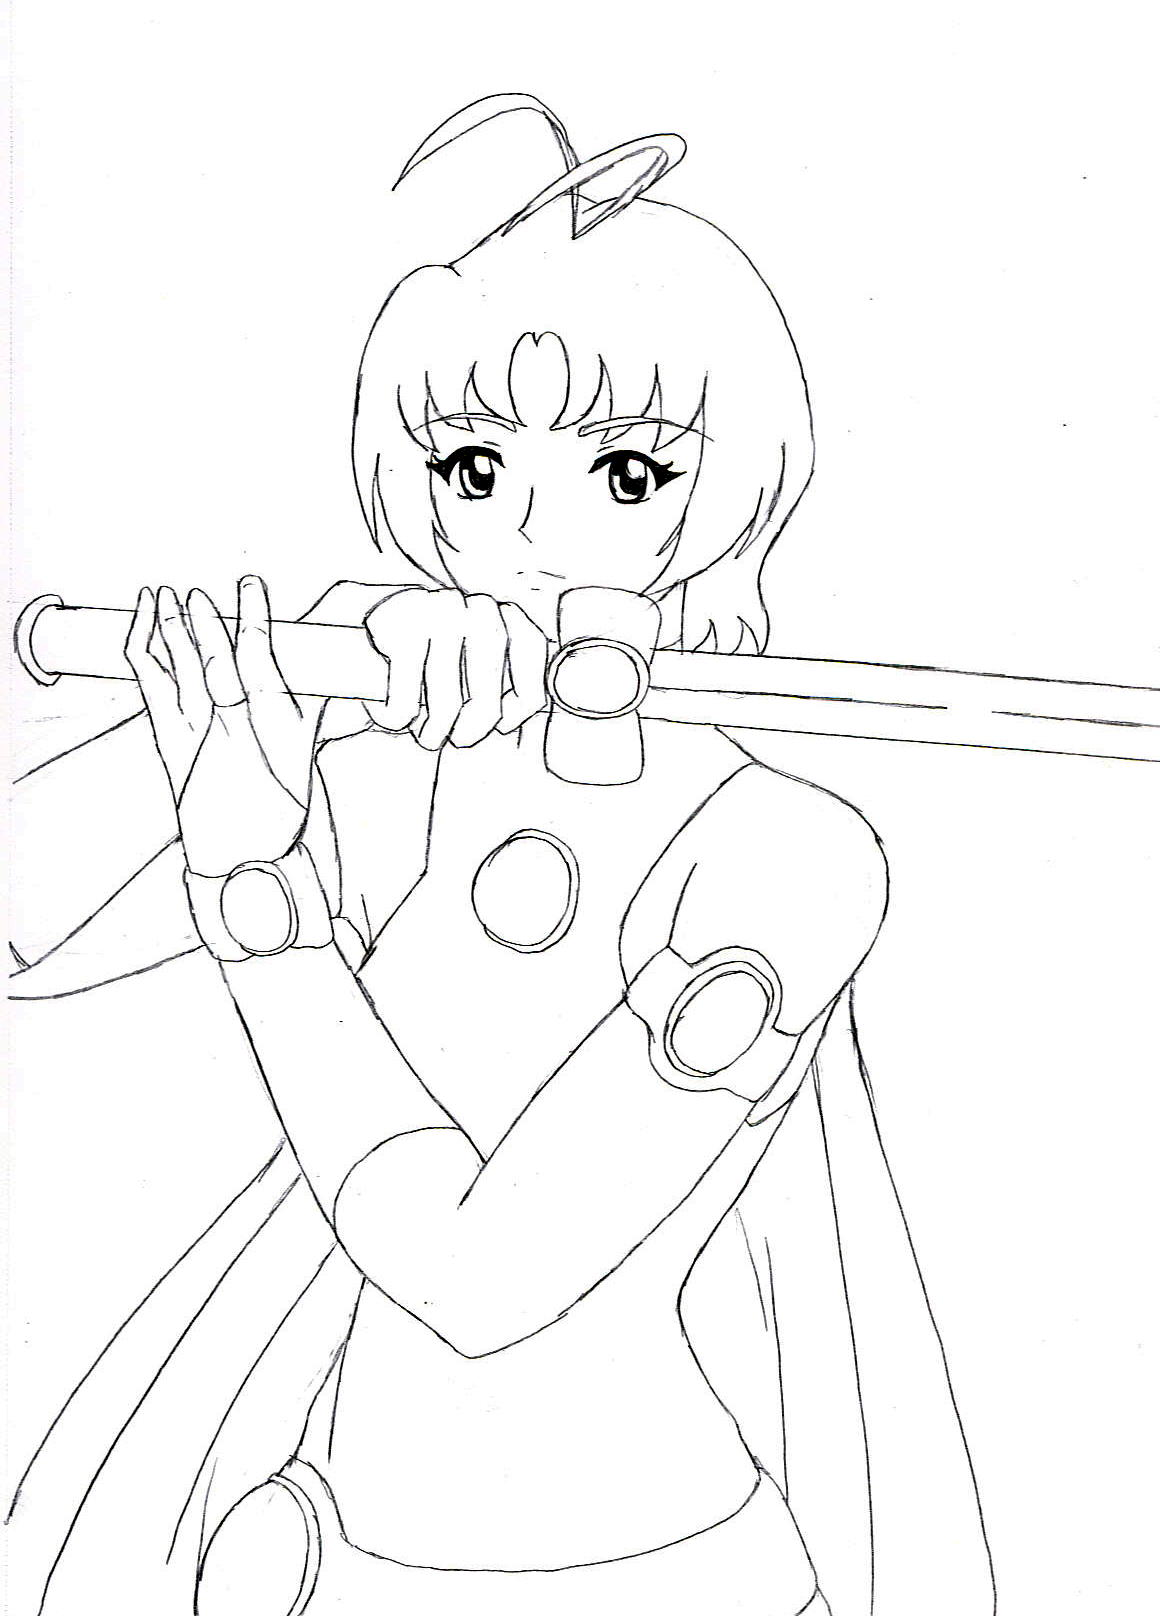 Ramyna, Warrior and Protector of Arasya by AnimeMangaLover